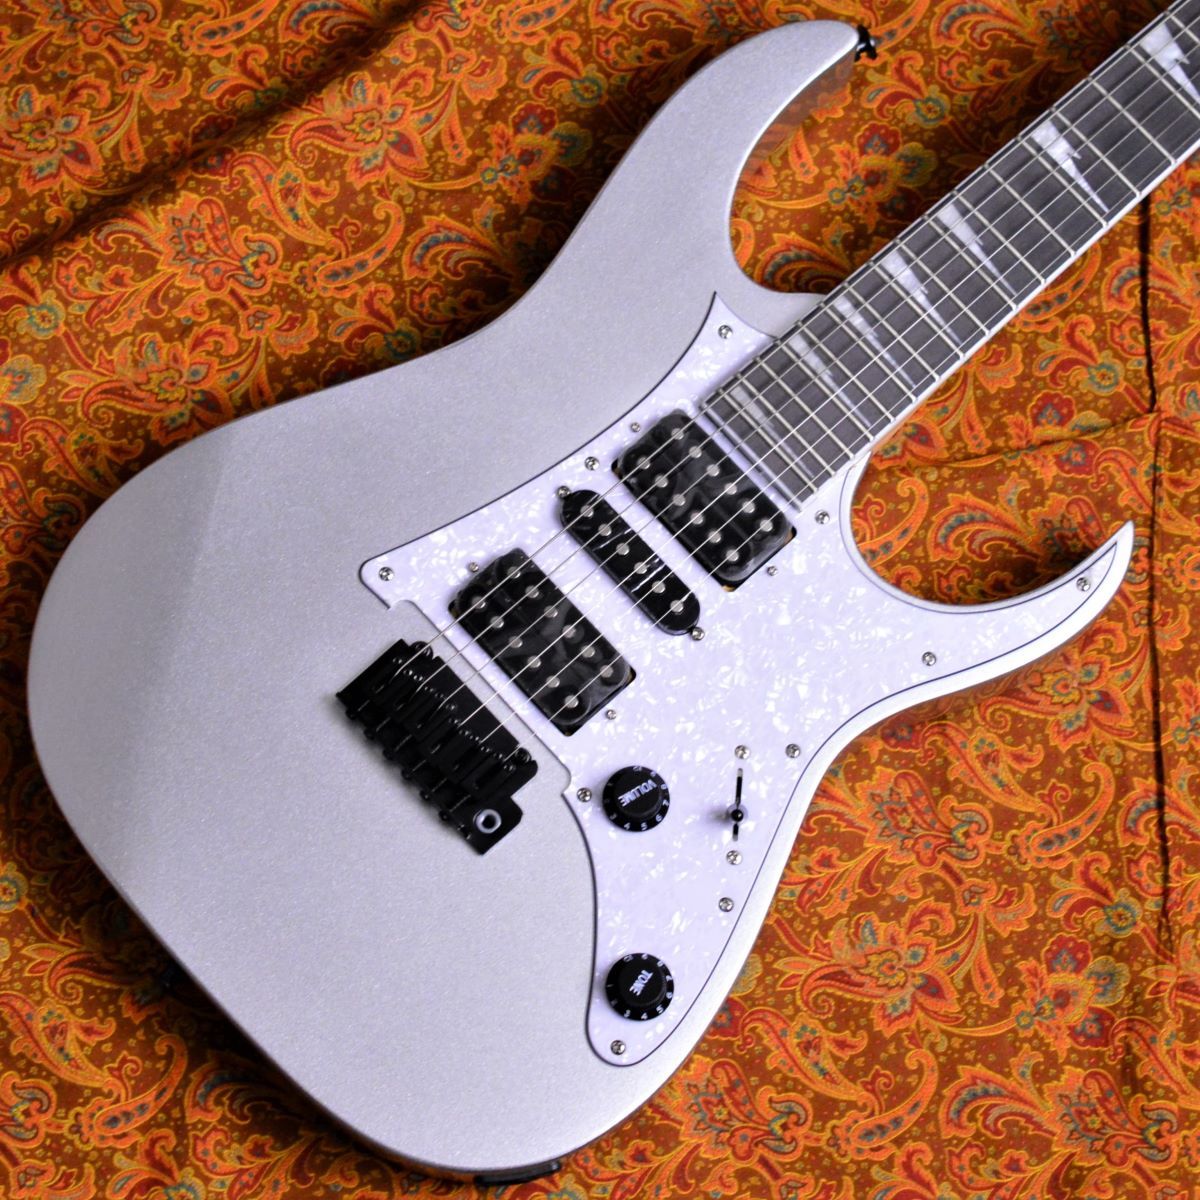 【5349】 Ibanez Gio Stratocaster model